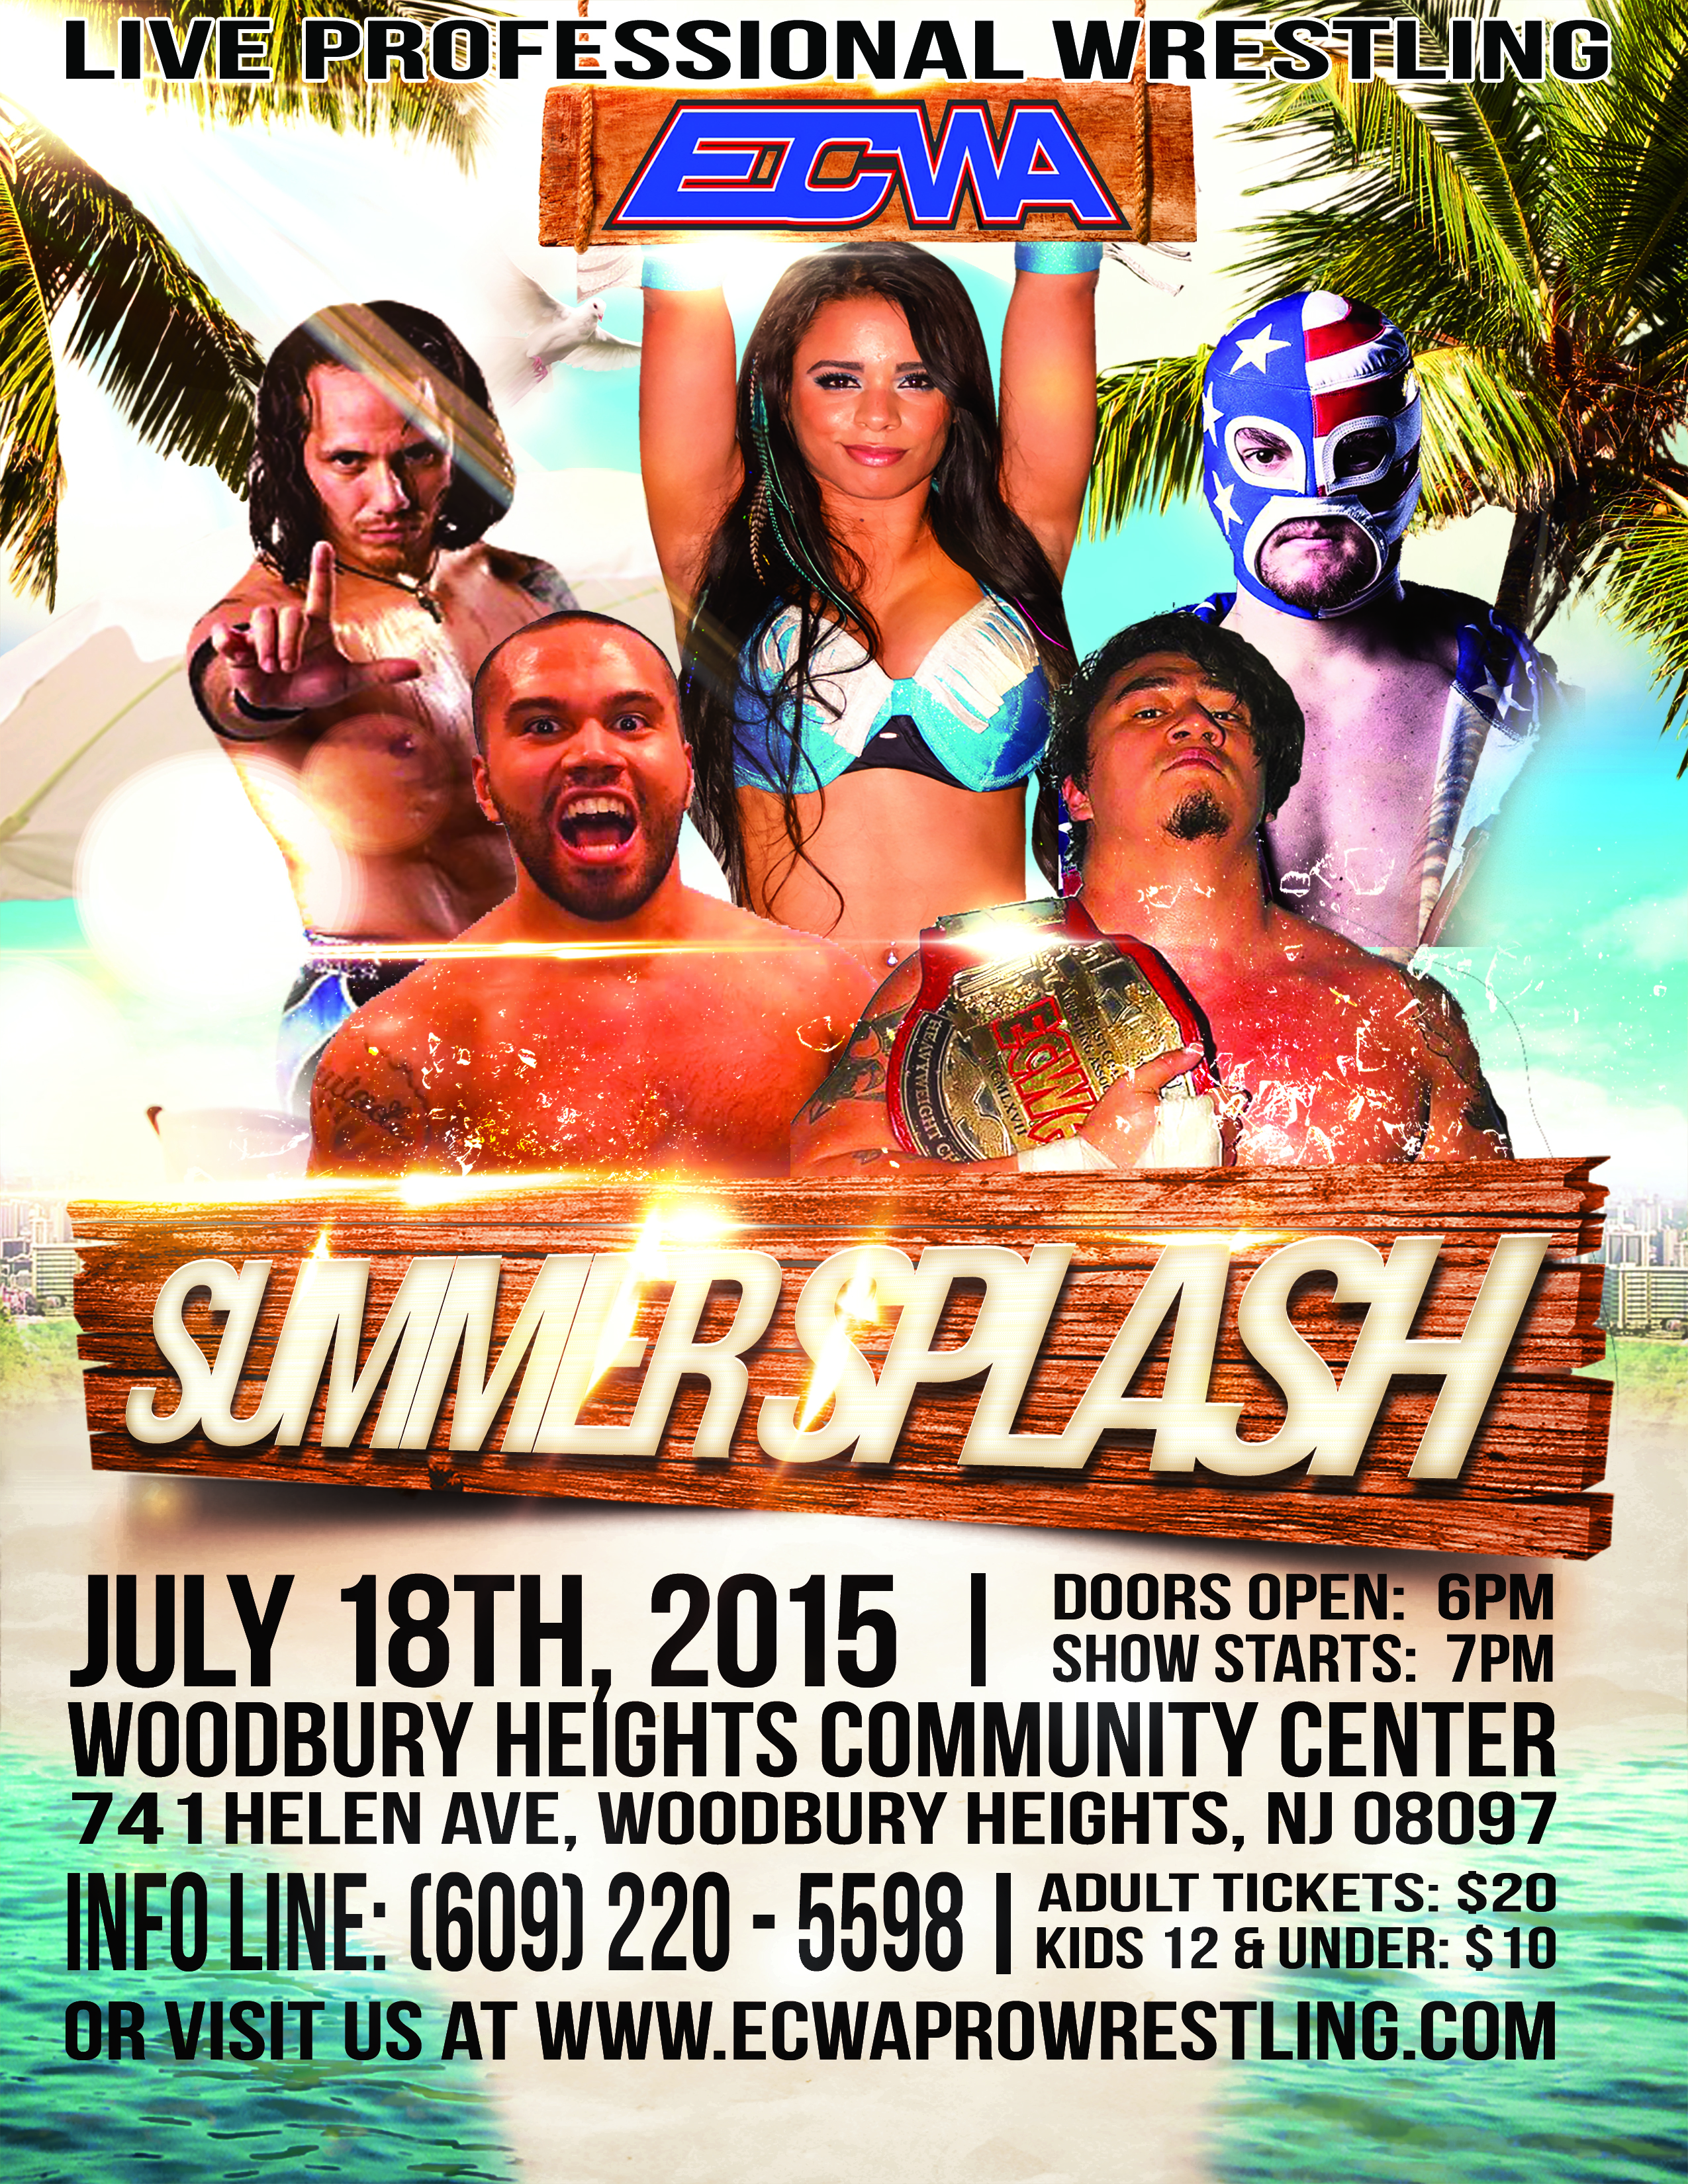 ECWA Summer Splash tonight in New Jersey!